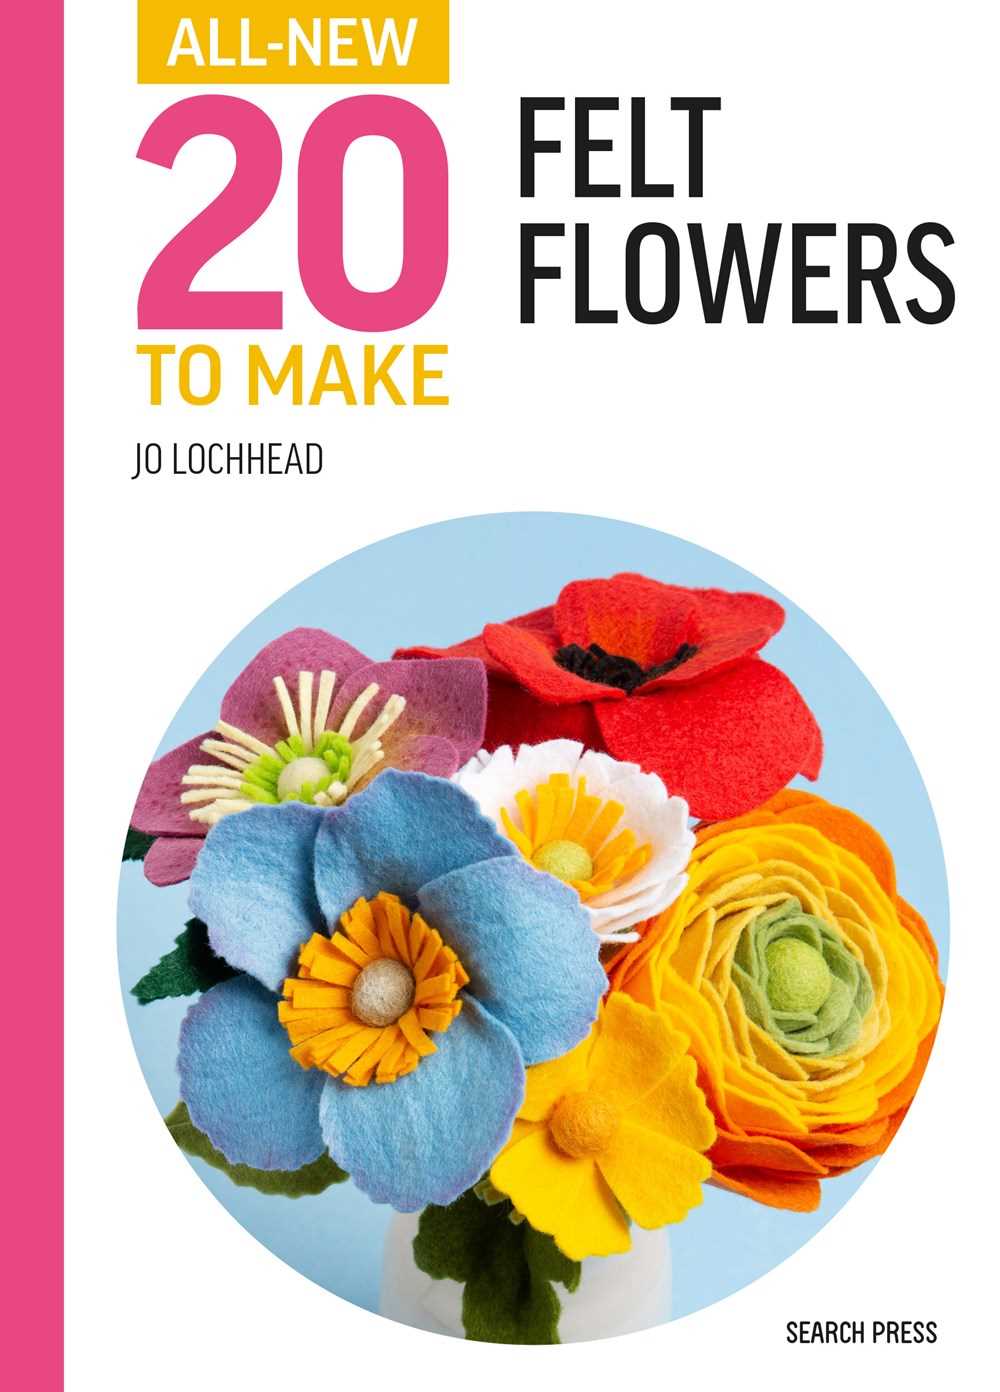 Felt Flowers (All-New Twenty to Make)